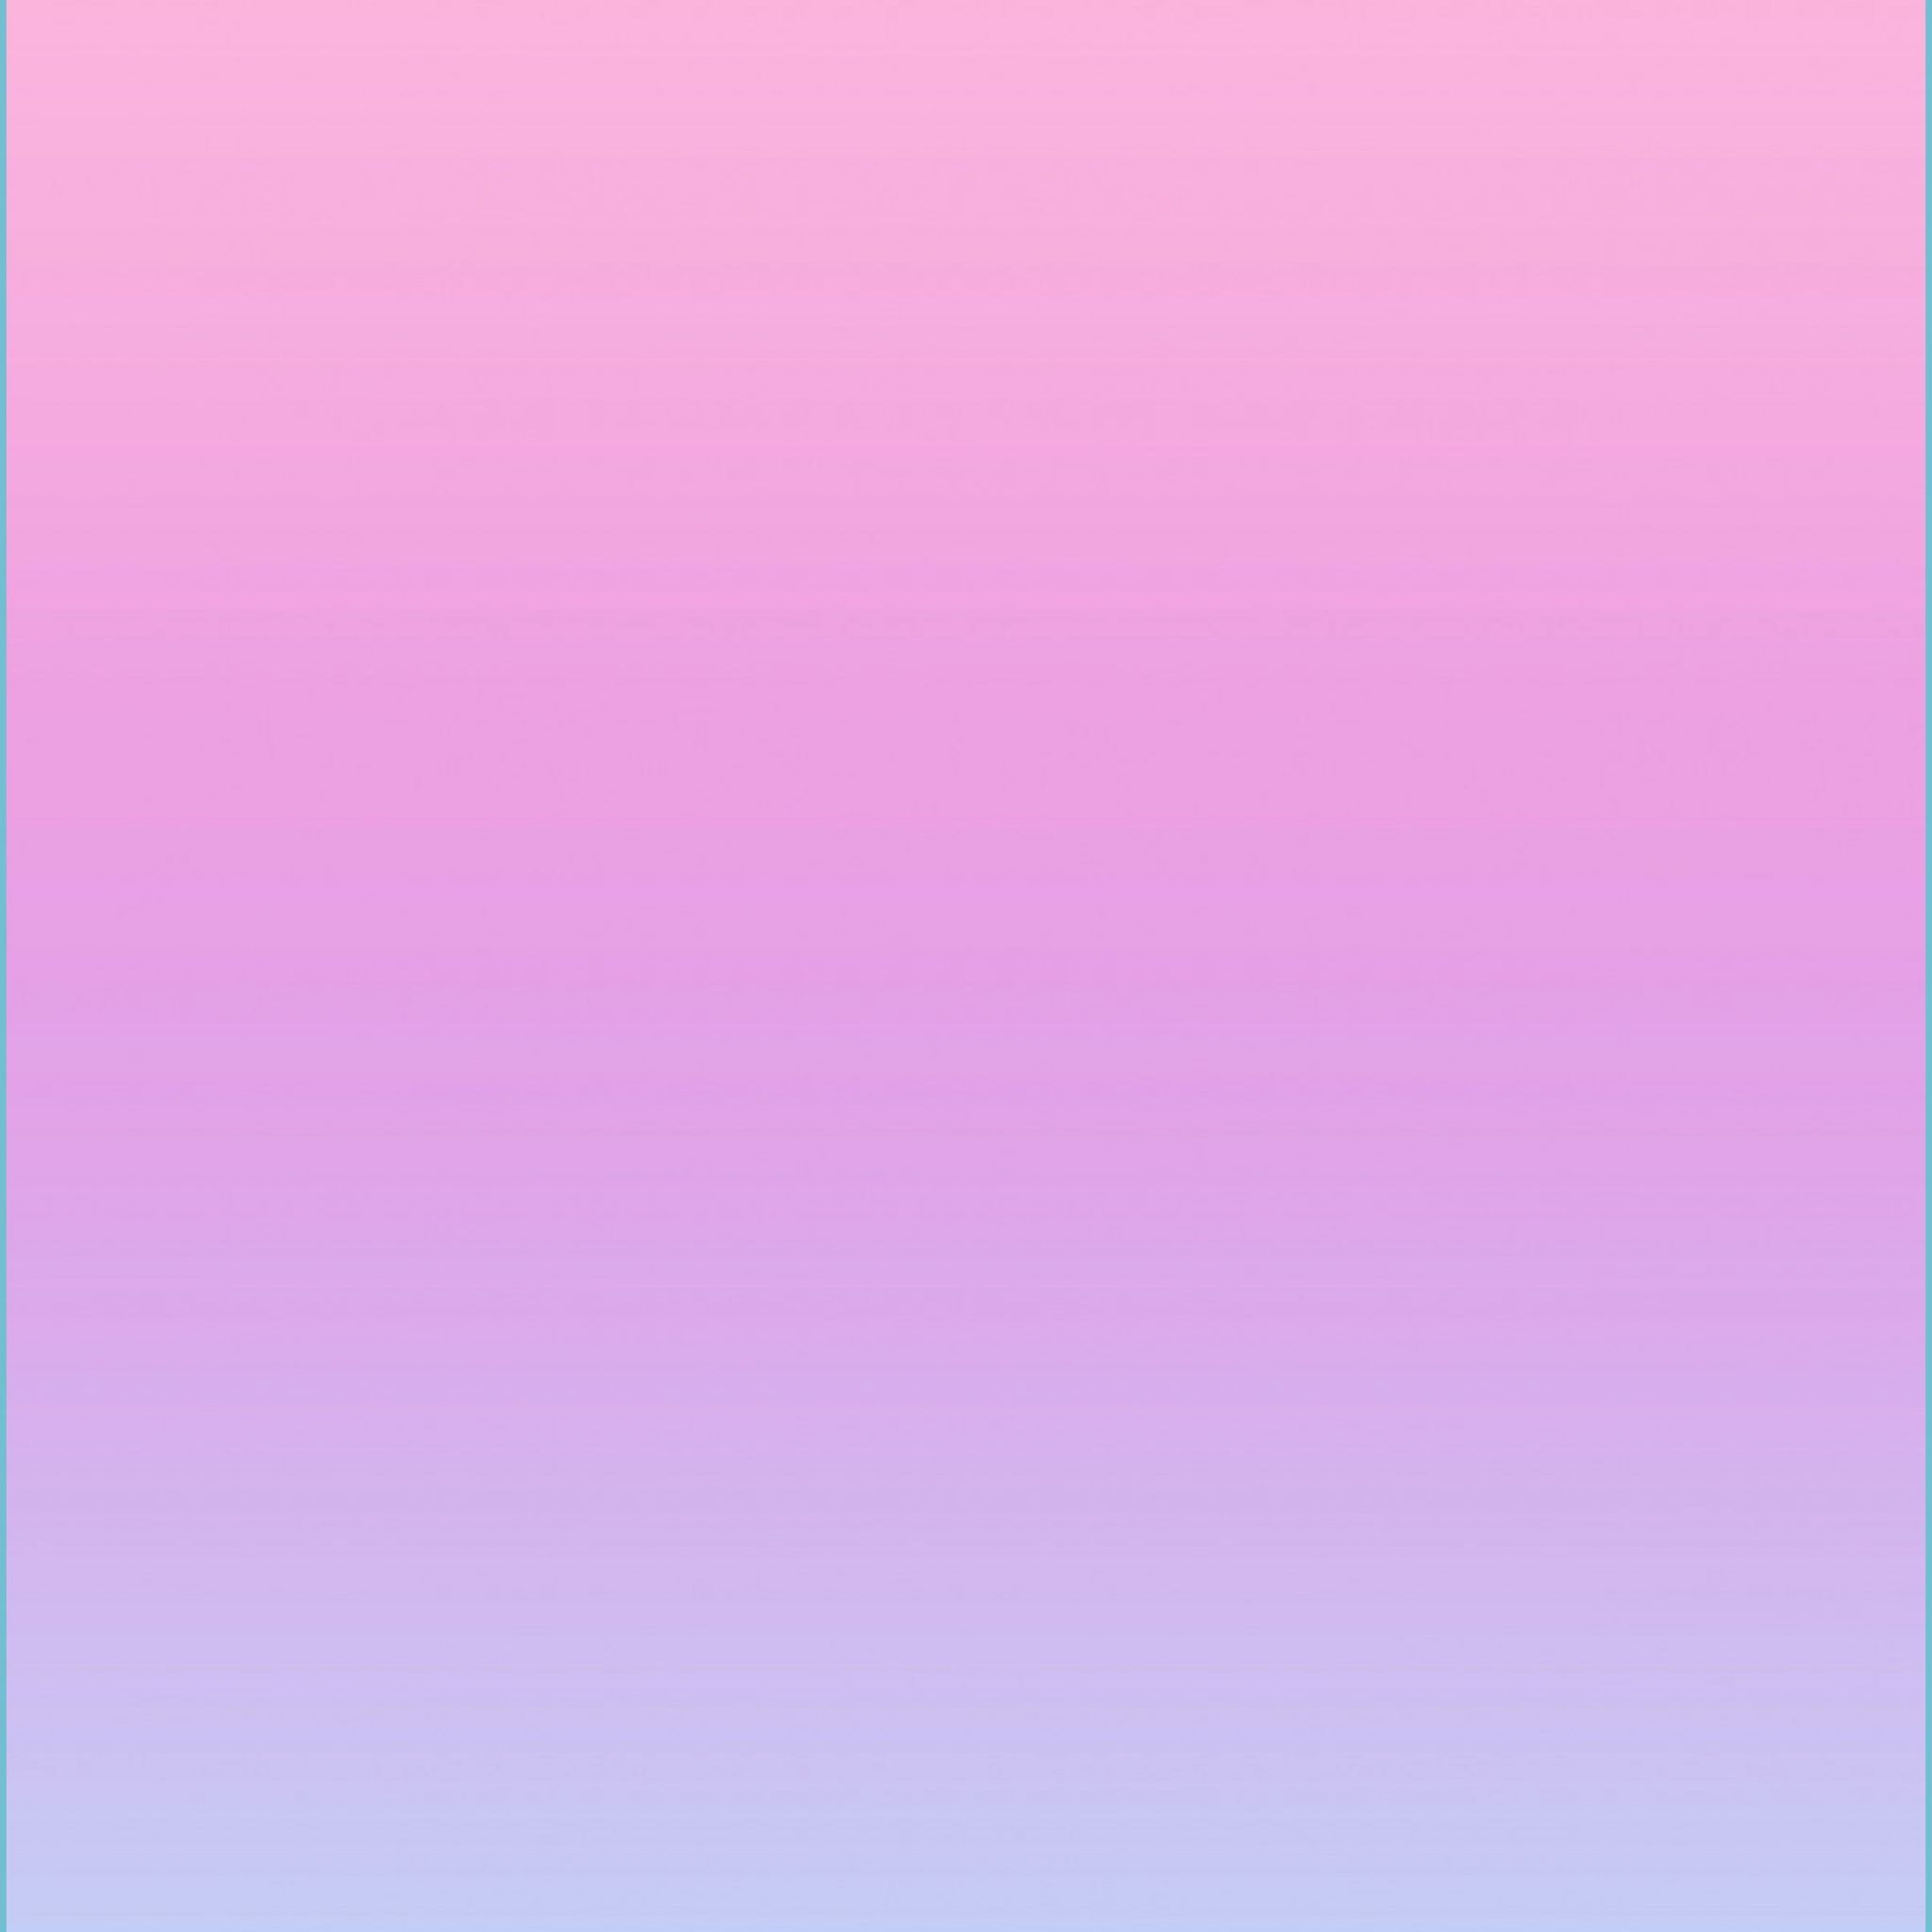 Pastel Blue And Pink Wallpaper Free Pastel Blue And Pink Purple And Blue Wallpaper